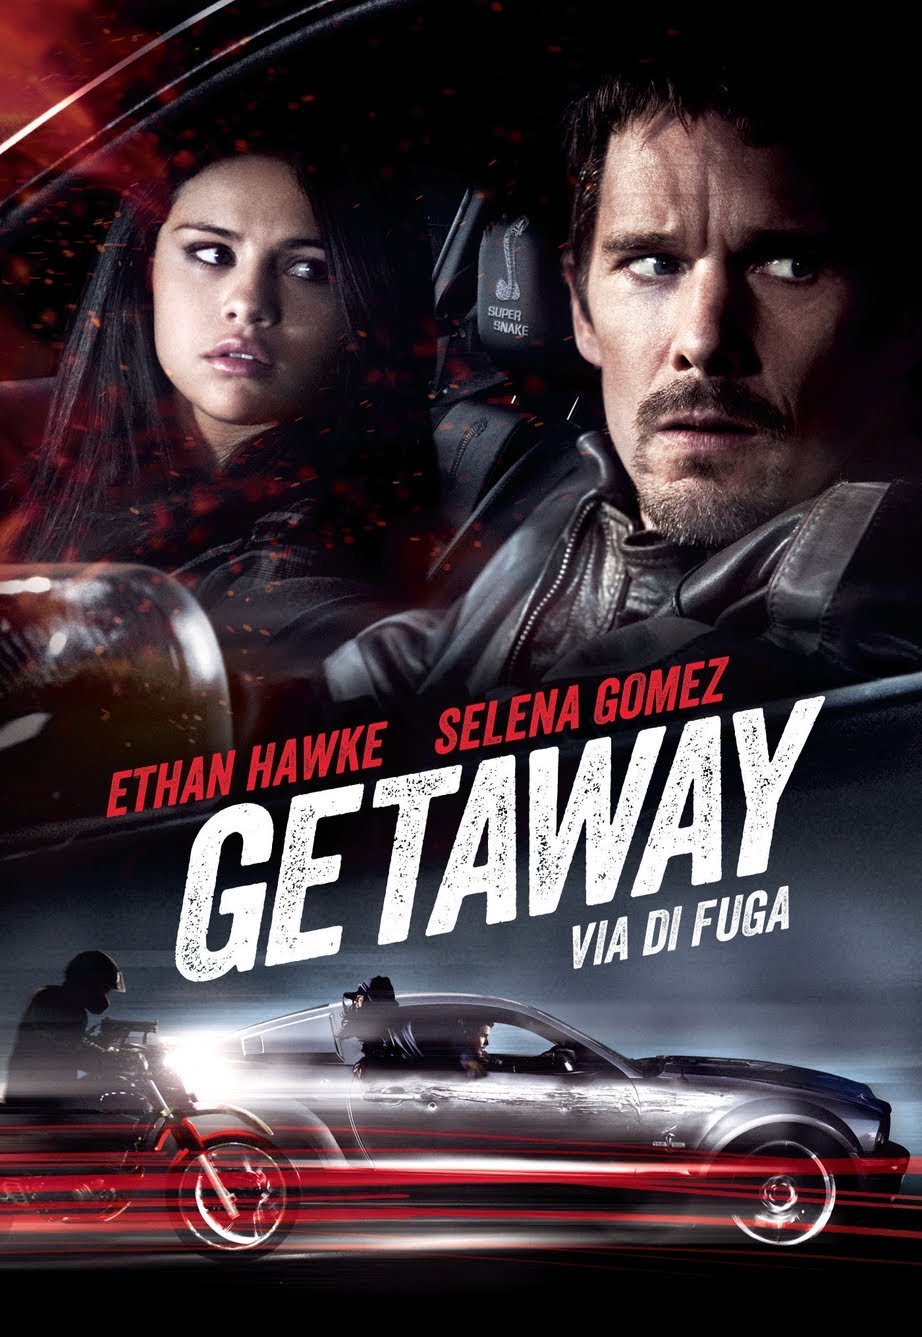 Getaway [HD] (2014)